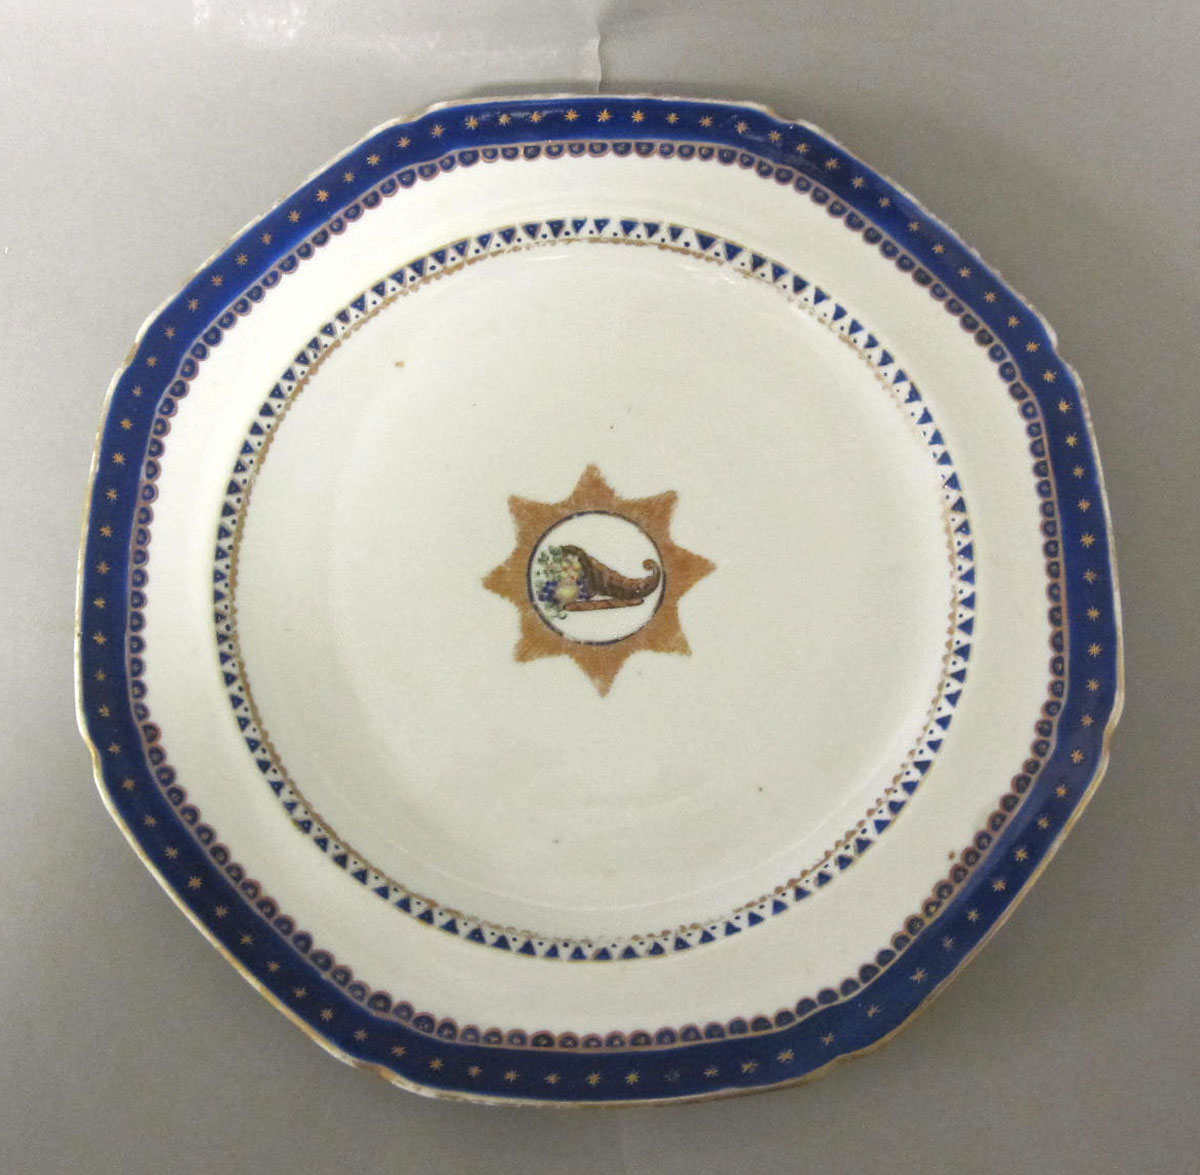 1965.0718.011 Porcelain plate